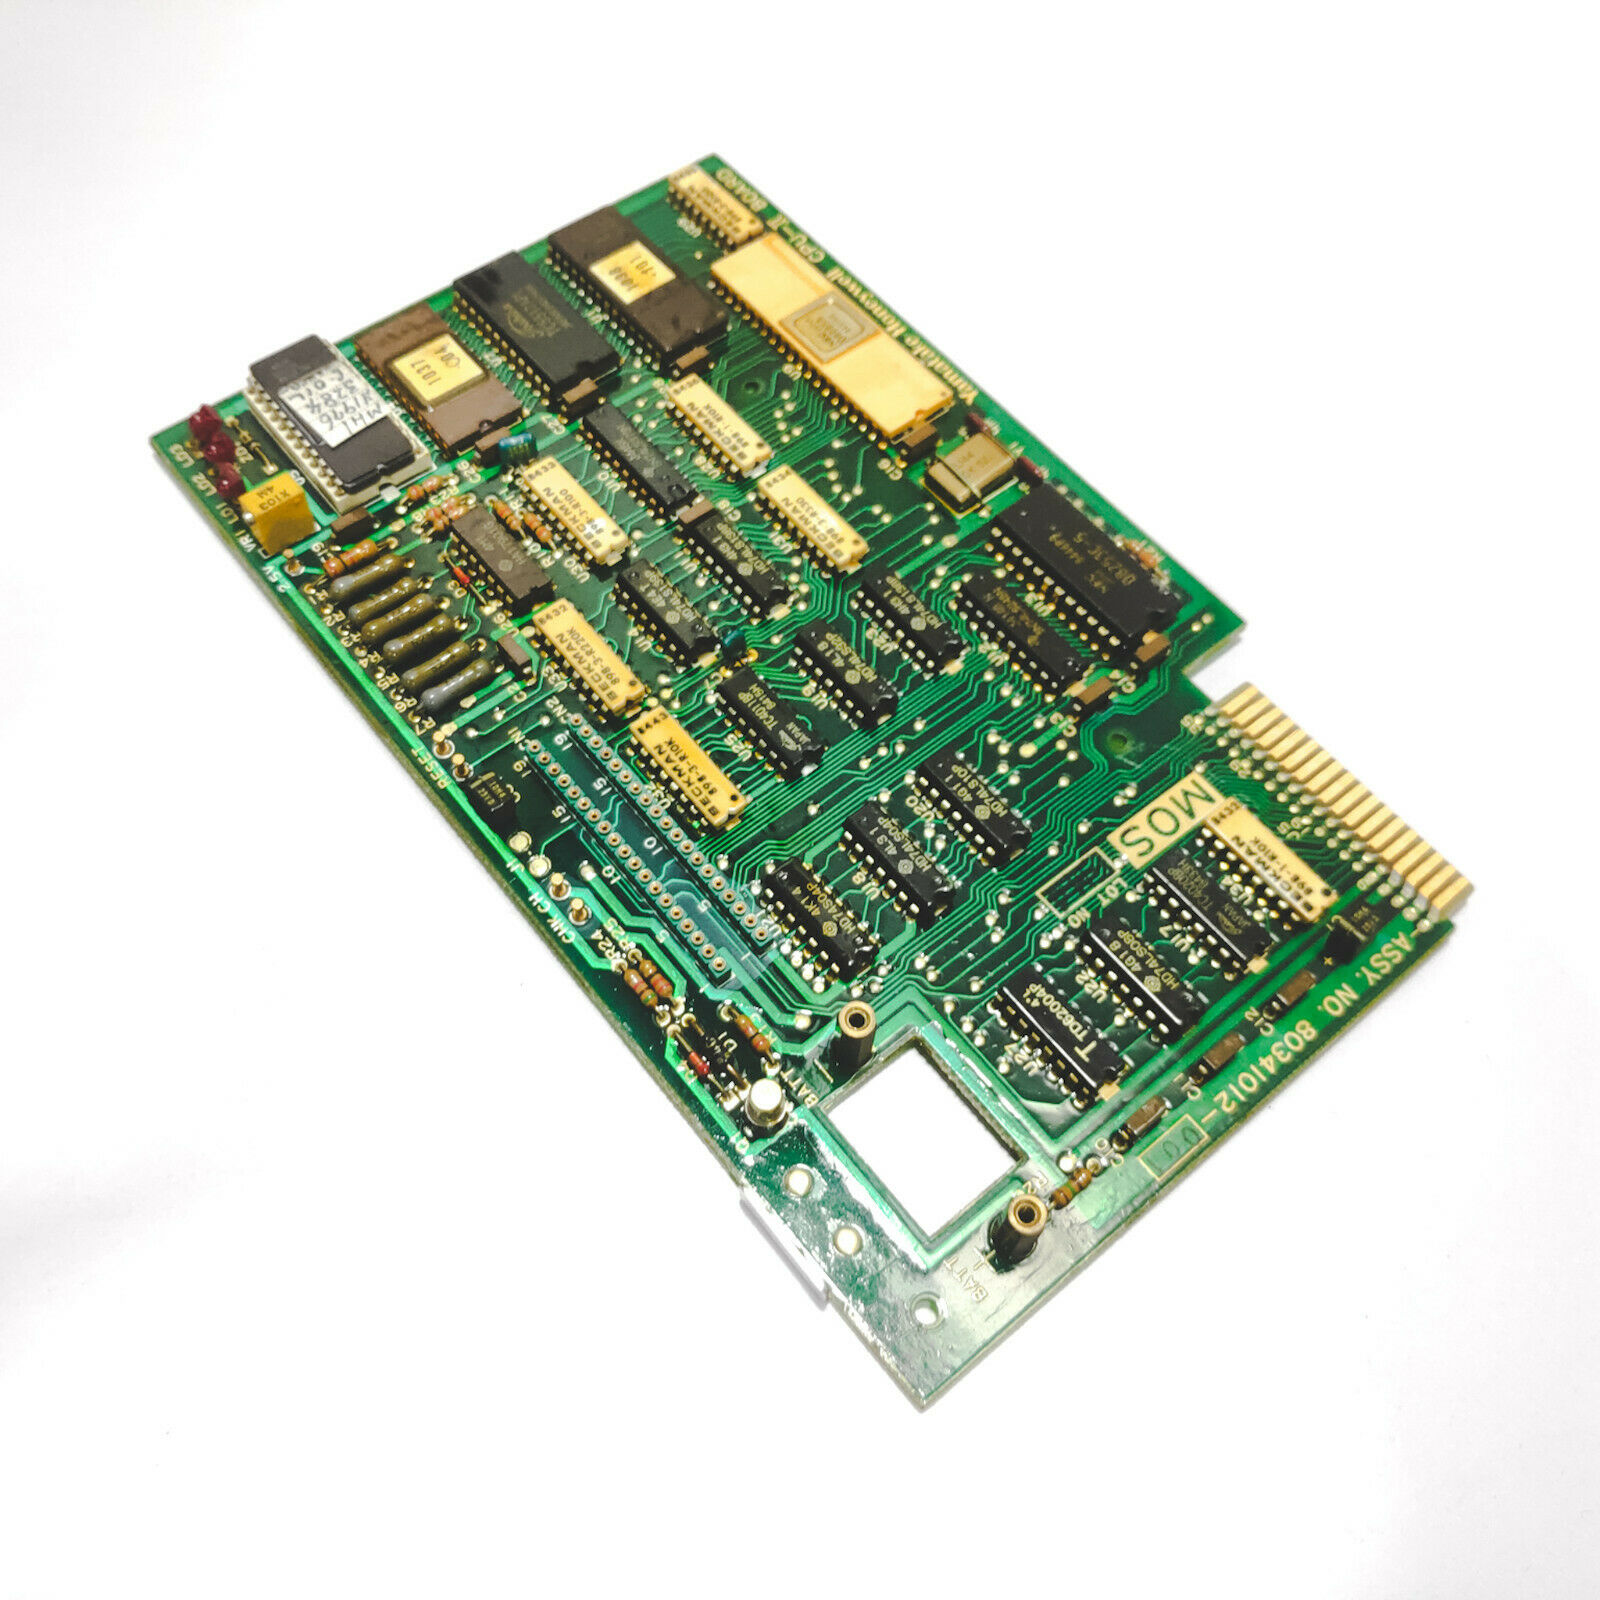 Yamatake Honeywell MOS 80341012-001 CPU-II Board PCB